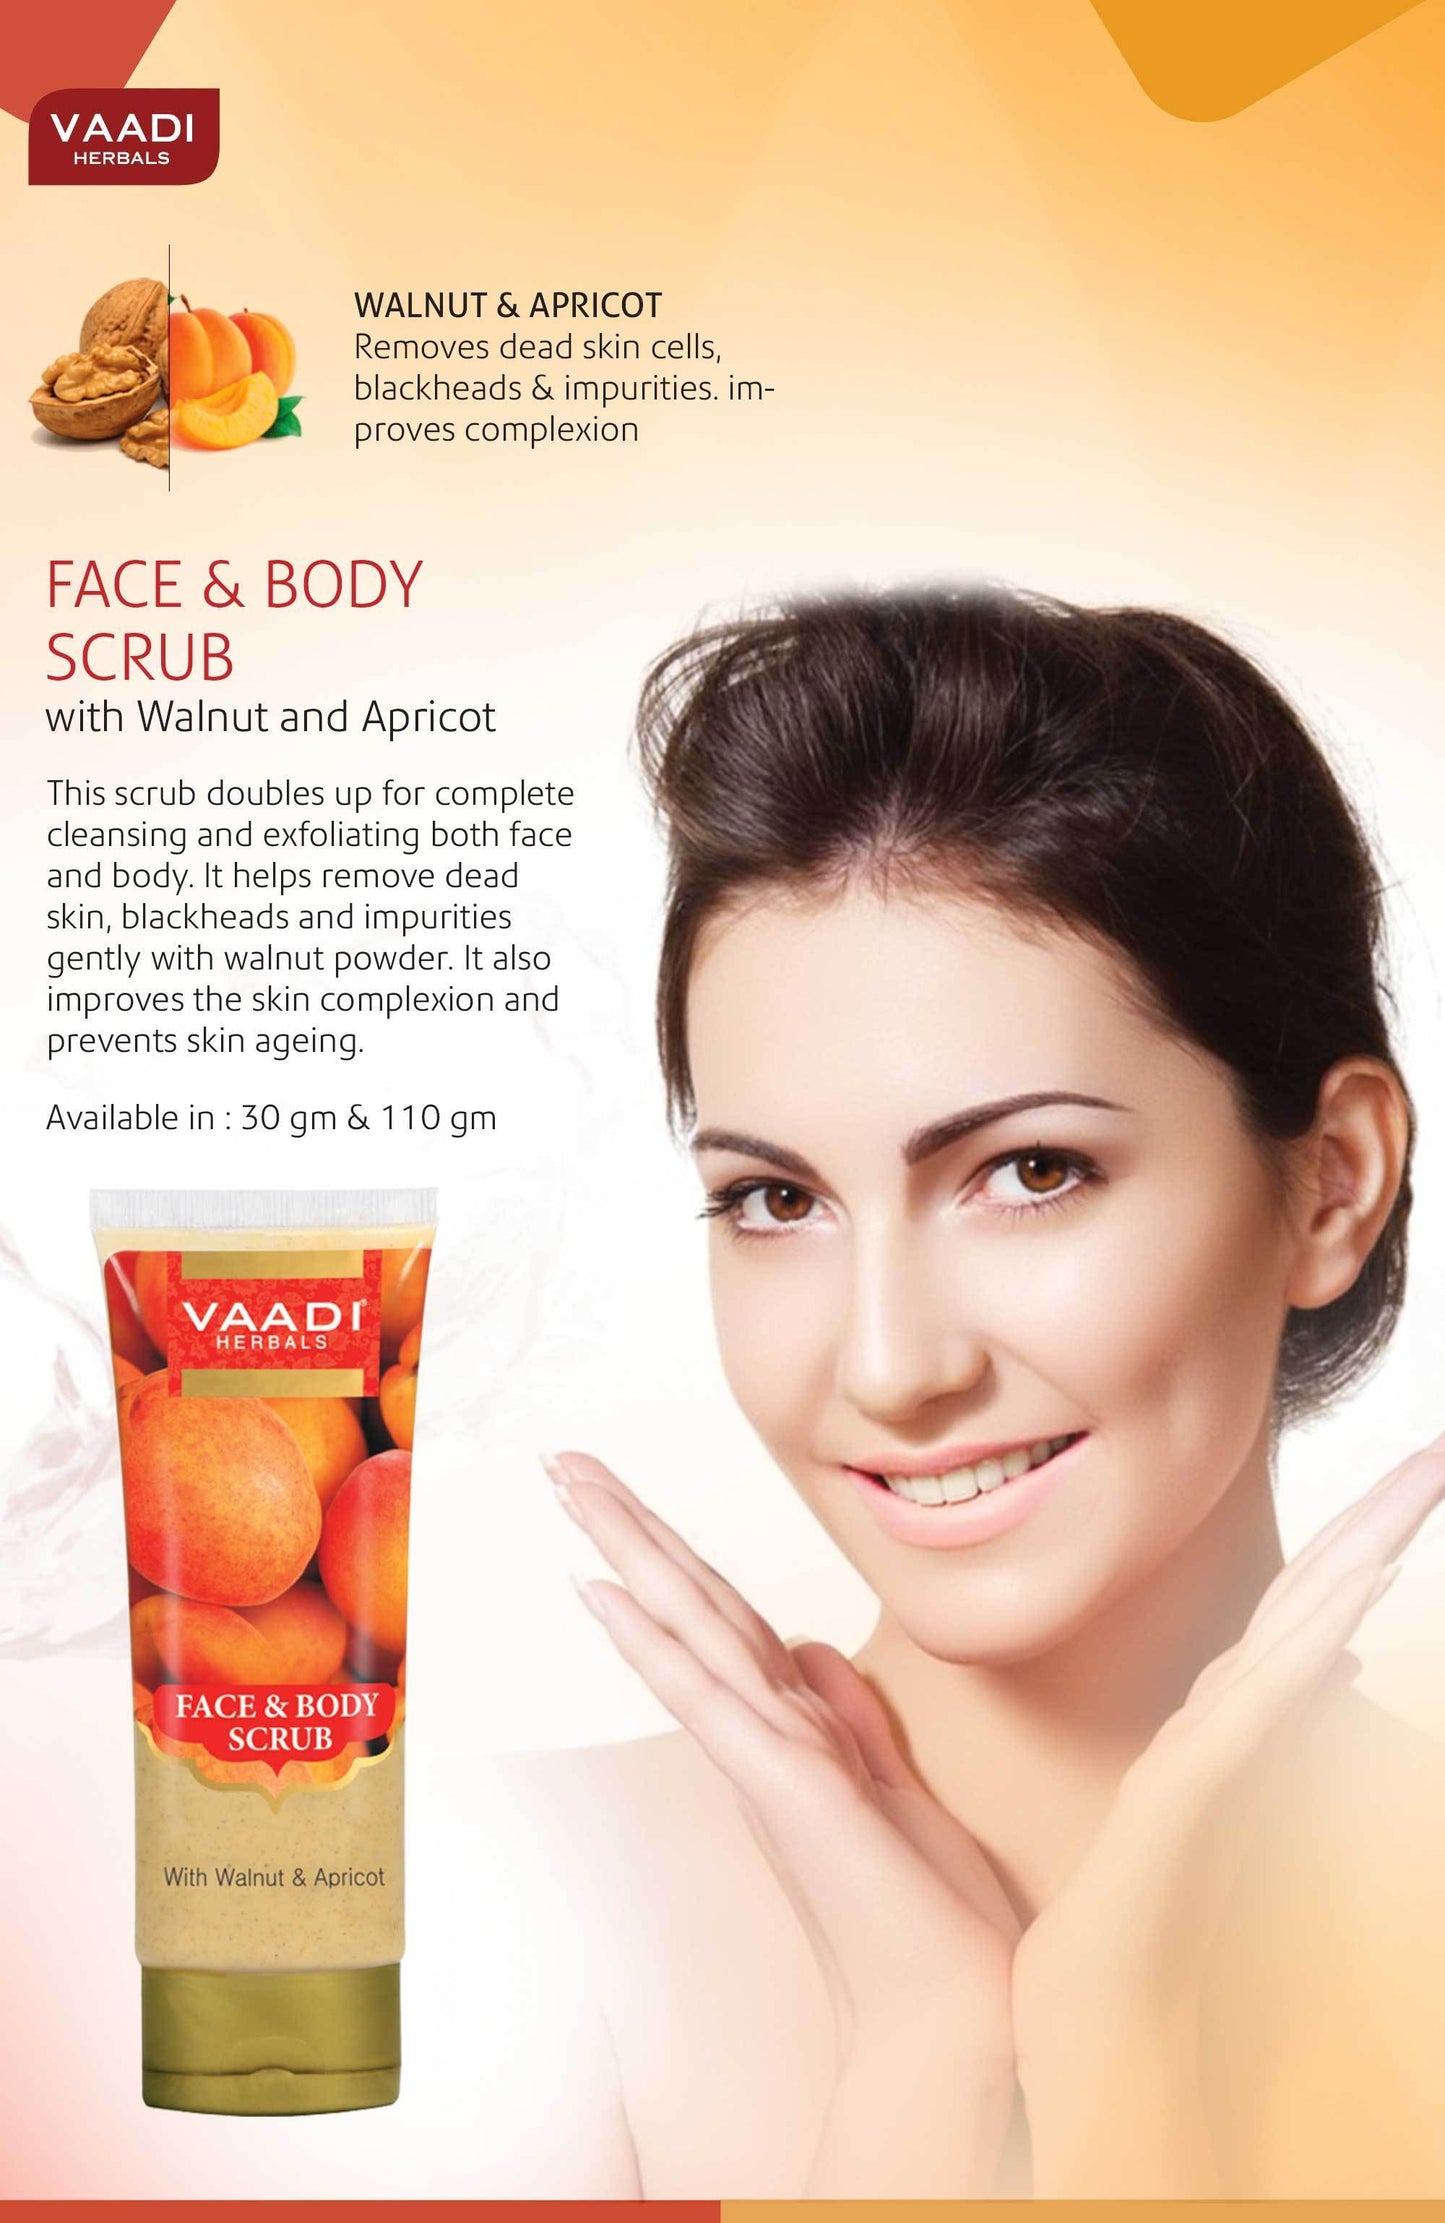 Organic Face & Body Scrub with Walnut & Apricot - Exfoliates & Unclogs Pores - Keeps Skin Youthful (2 x 110 gms / 4 oz)